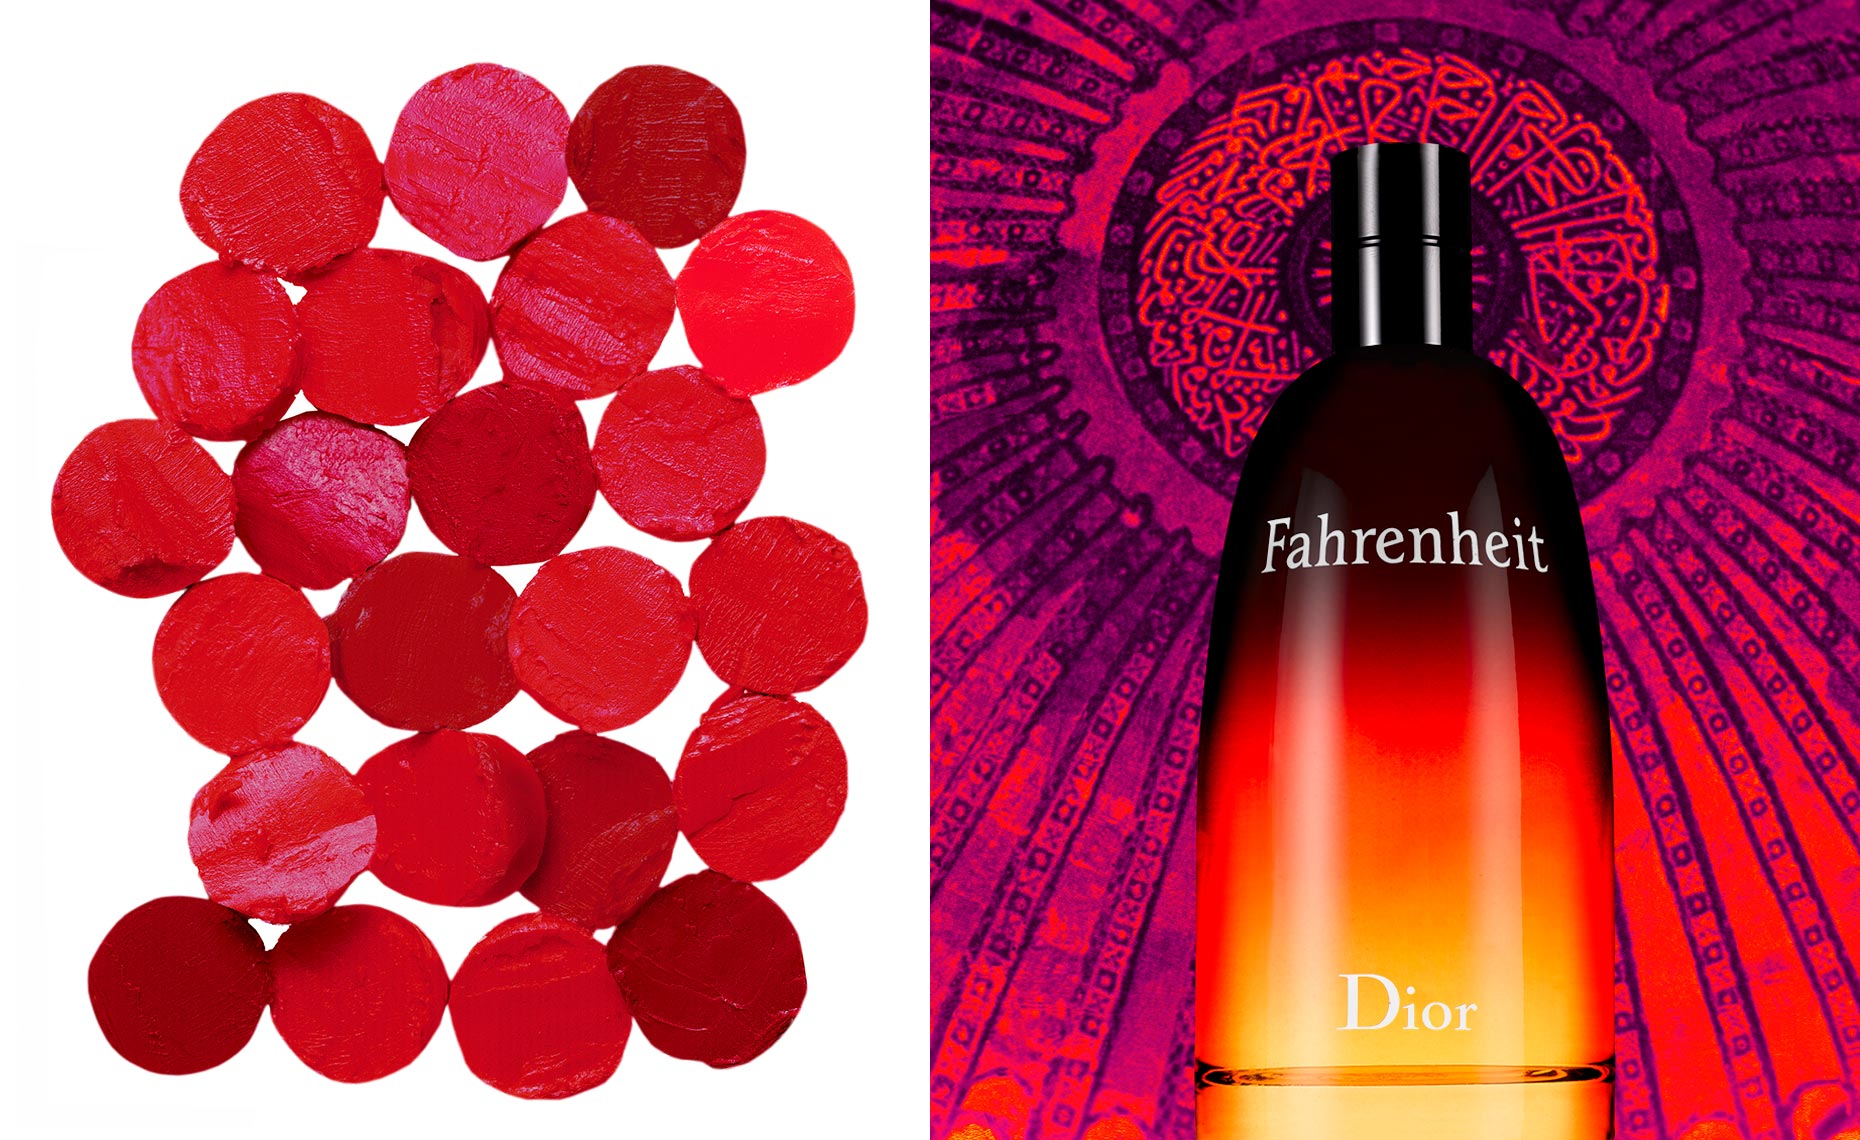 lipstick palette and Dior Fahrenheit fragrance